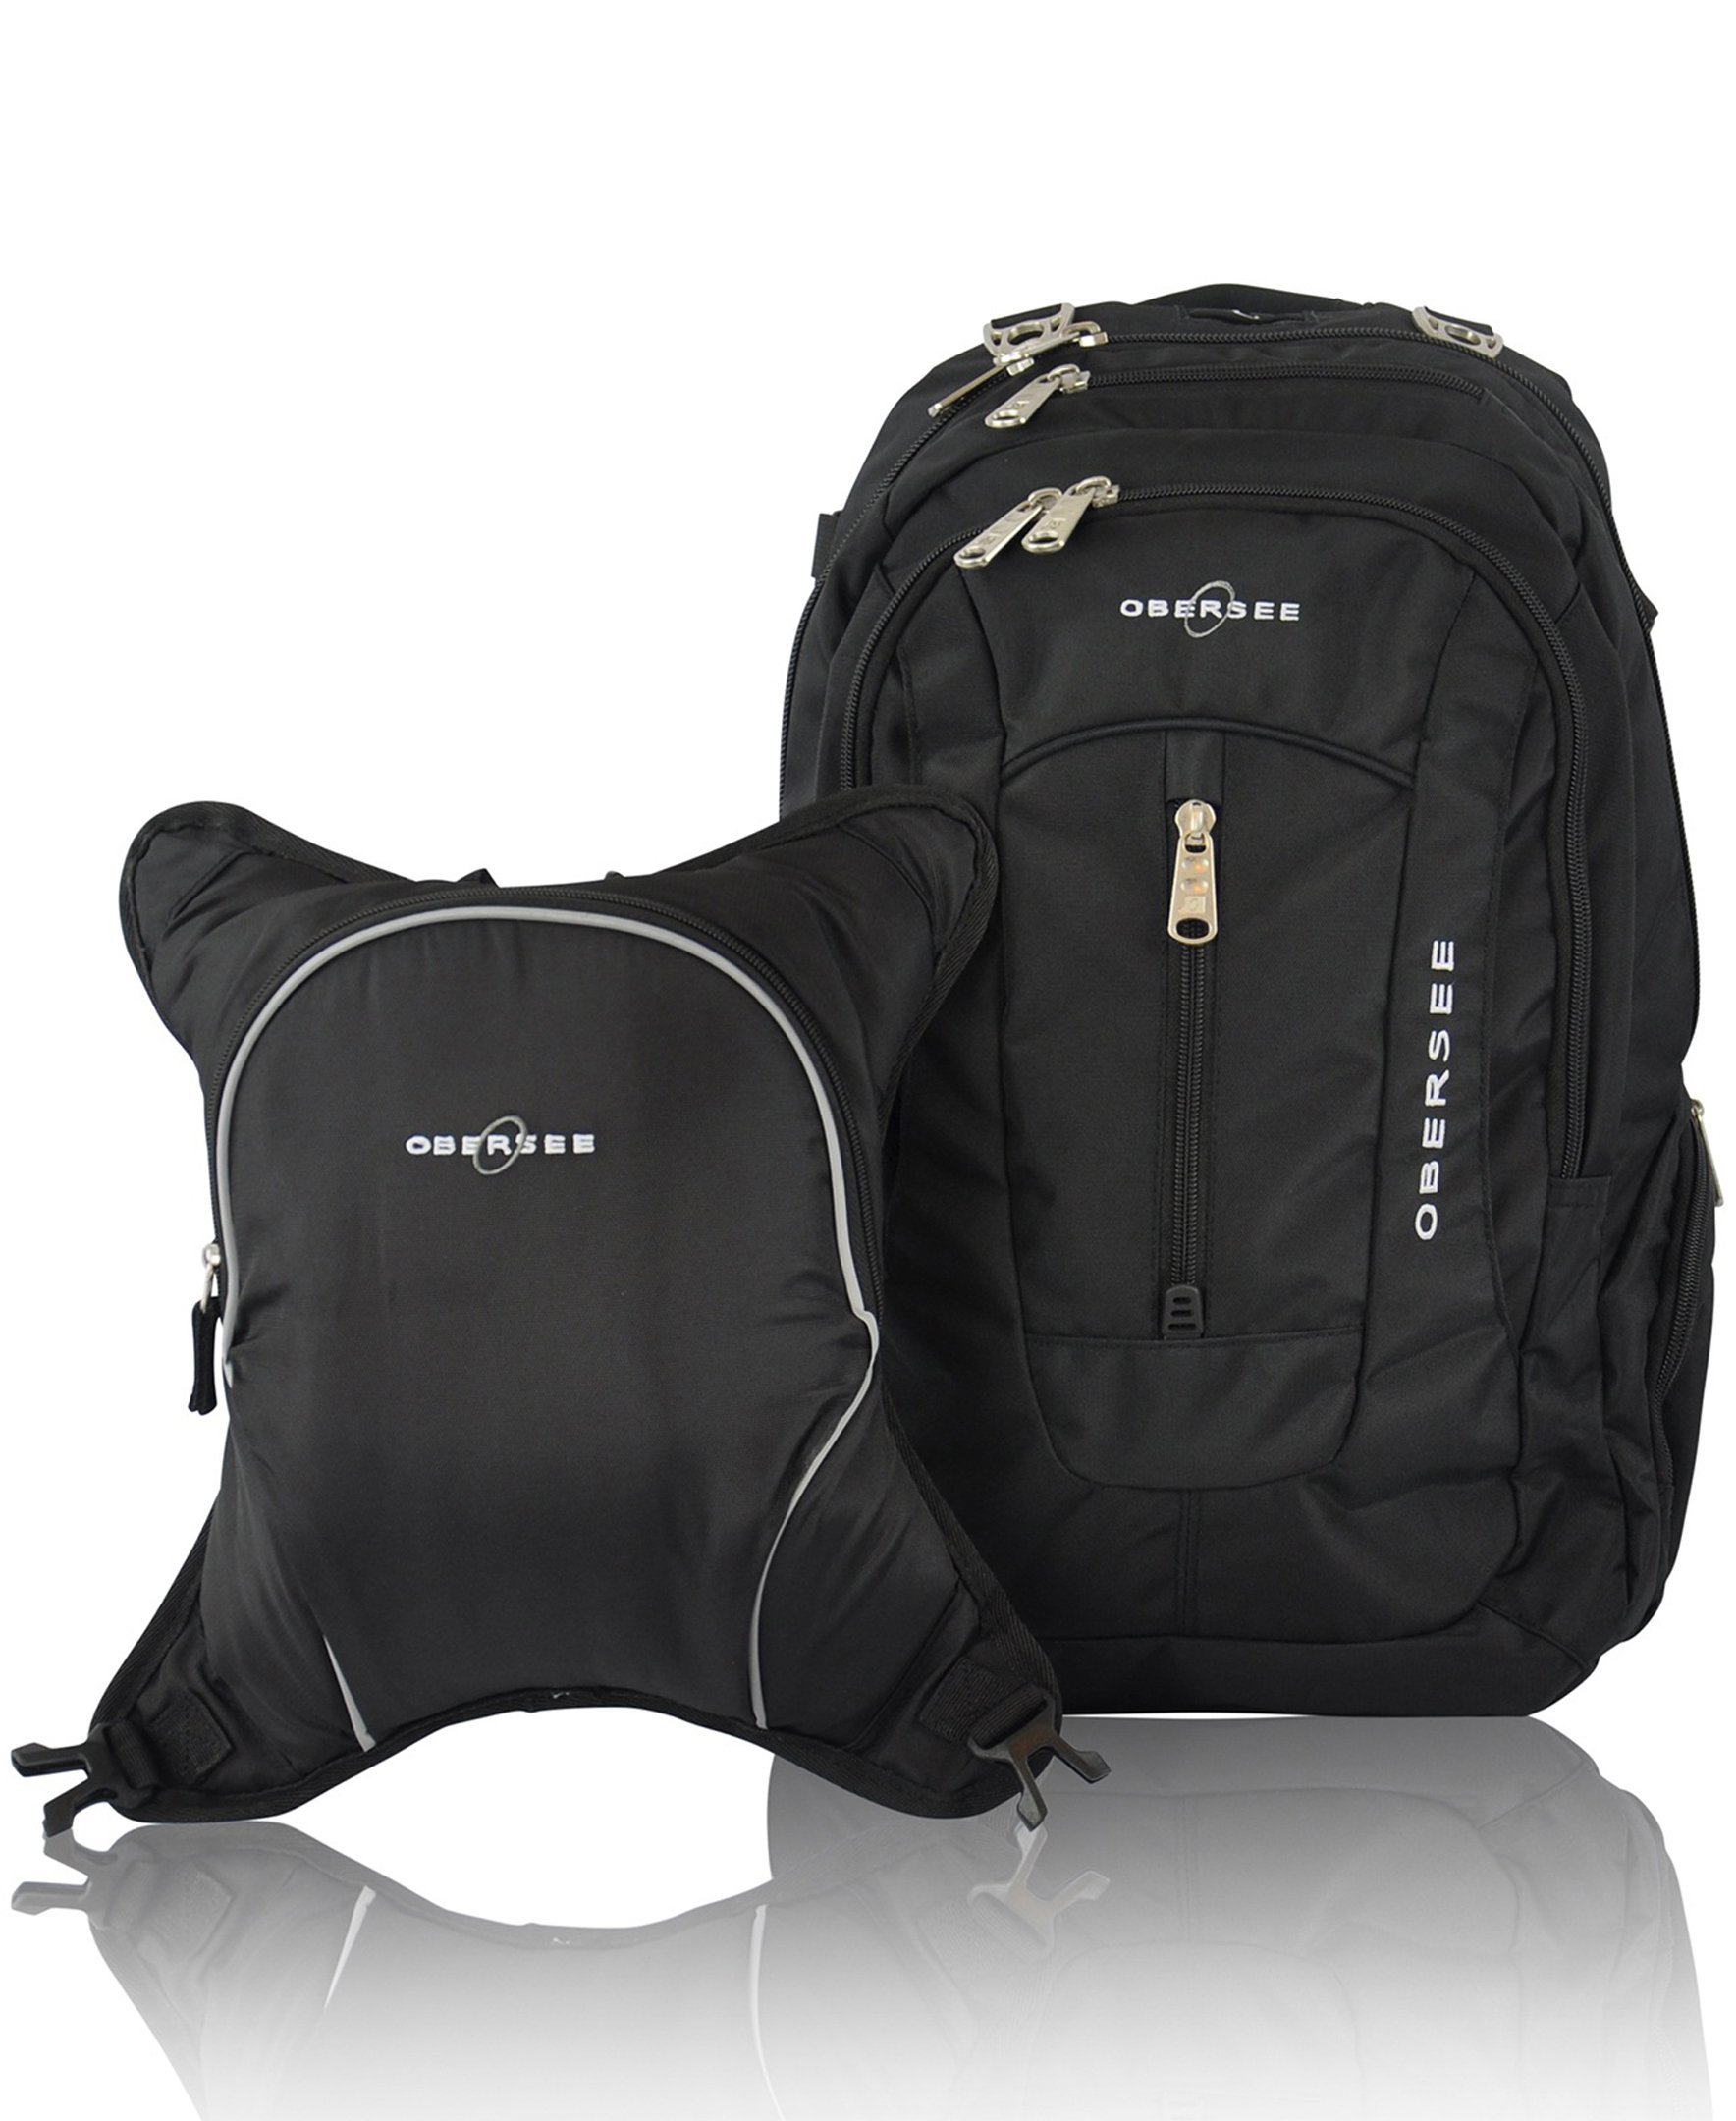 Obersee Bern Diaper Bag Backpack and Cooler, Black/Sand - image 3 of 10